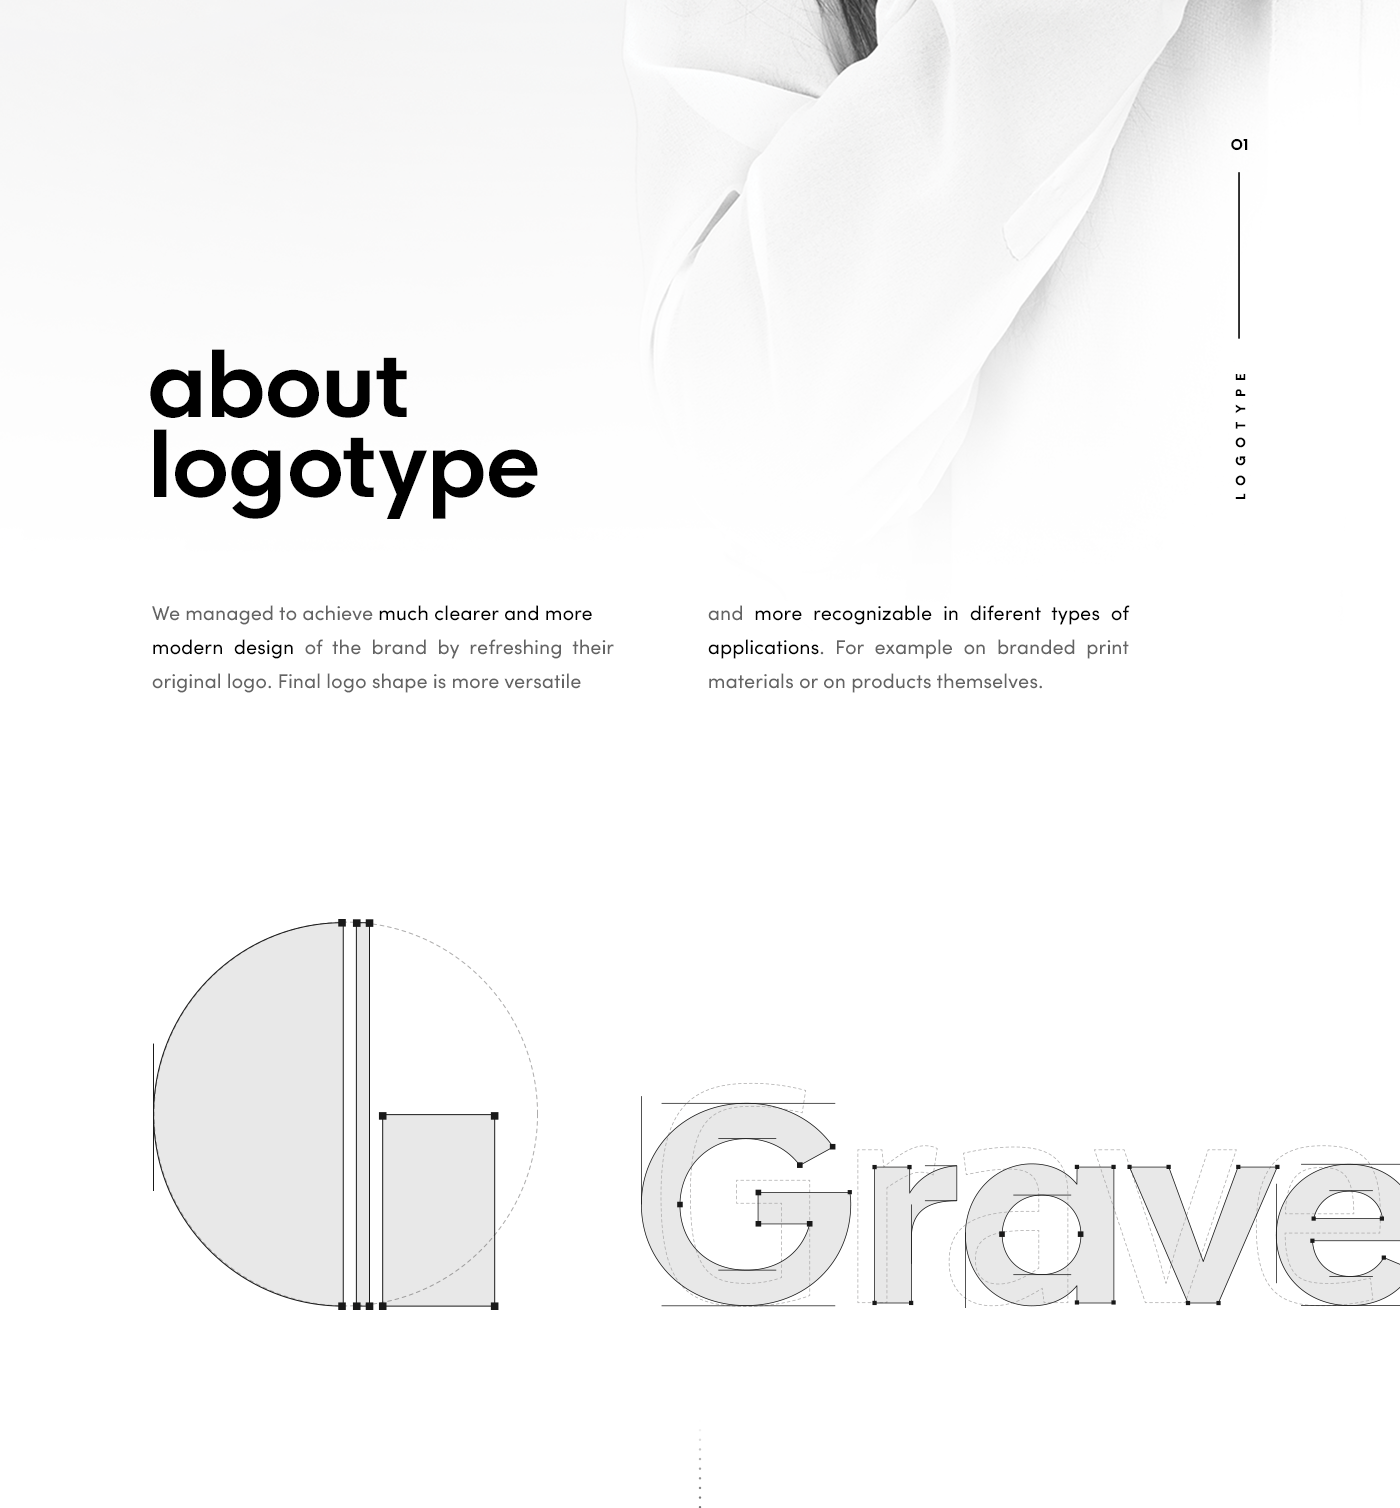 ux/ui Webdesign branding  motion art direction  concrete product design  graphic design  Corporate Identity gravelli